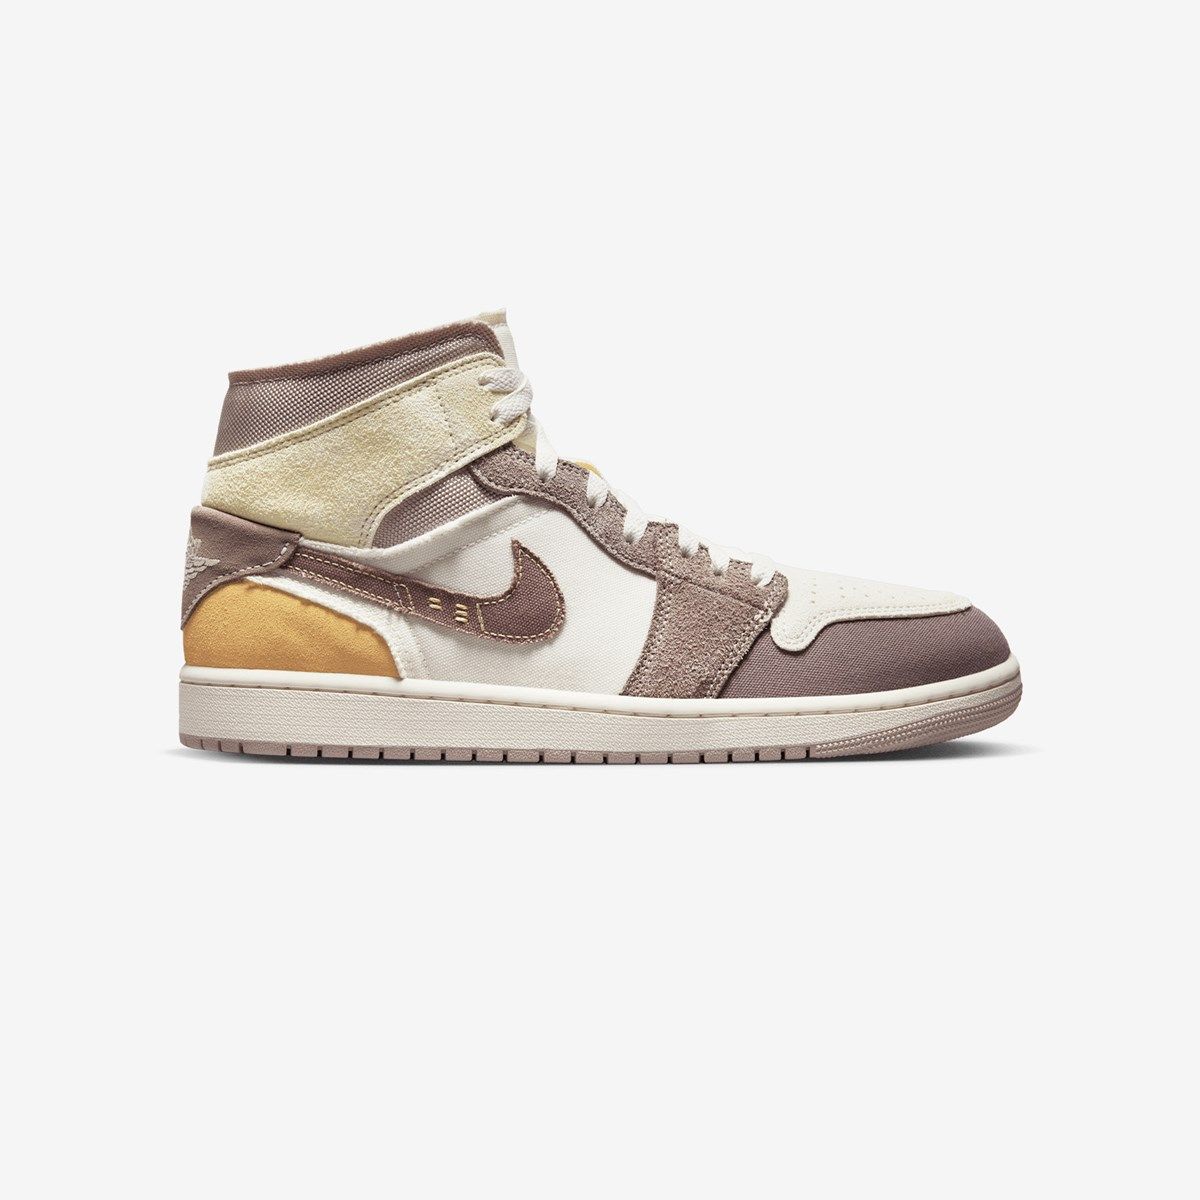 Jordan Brand | Sneakersnstuff